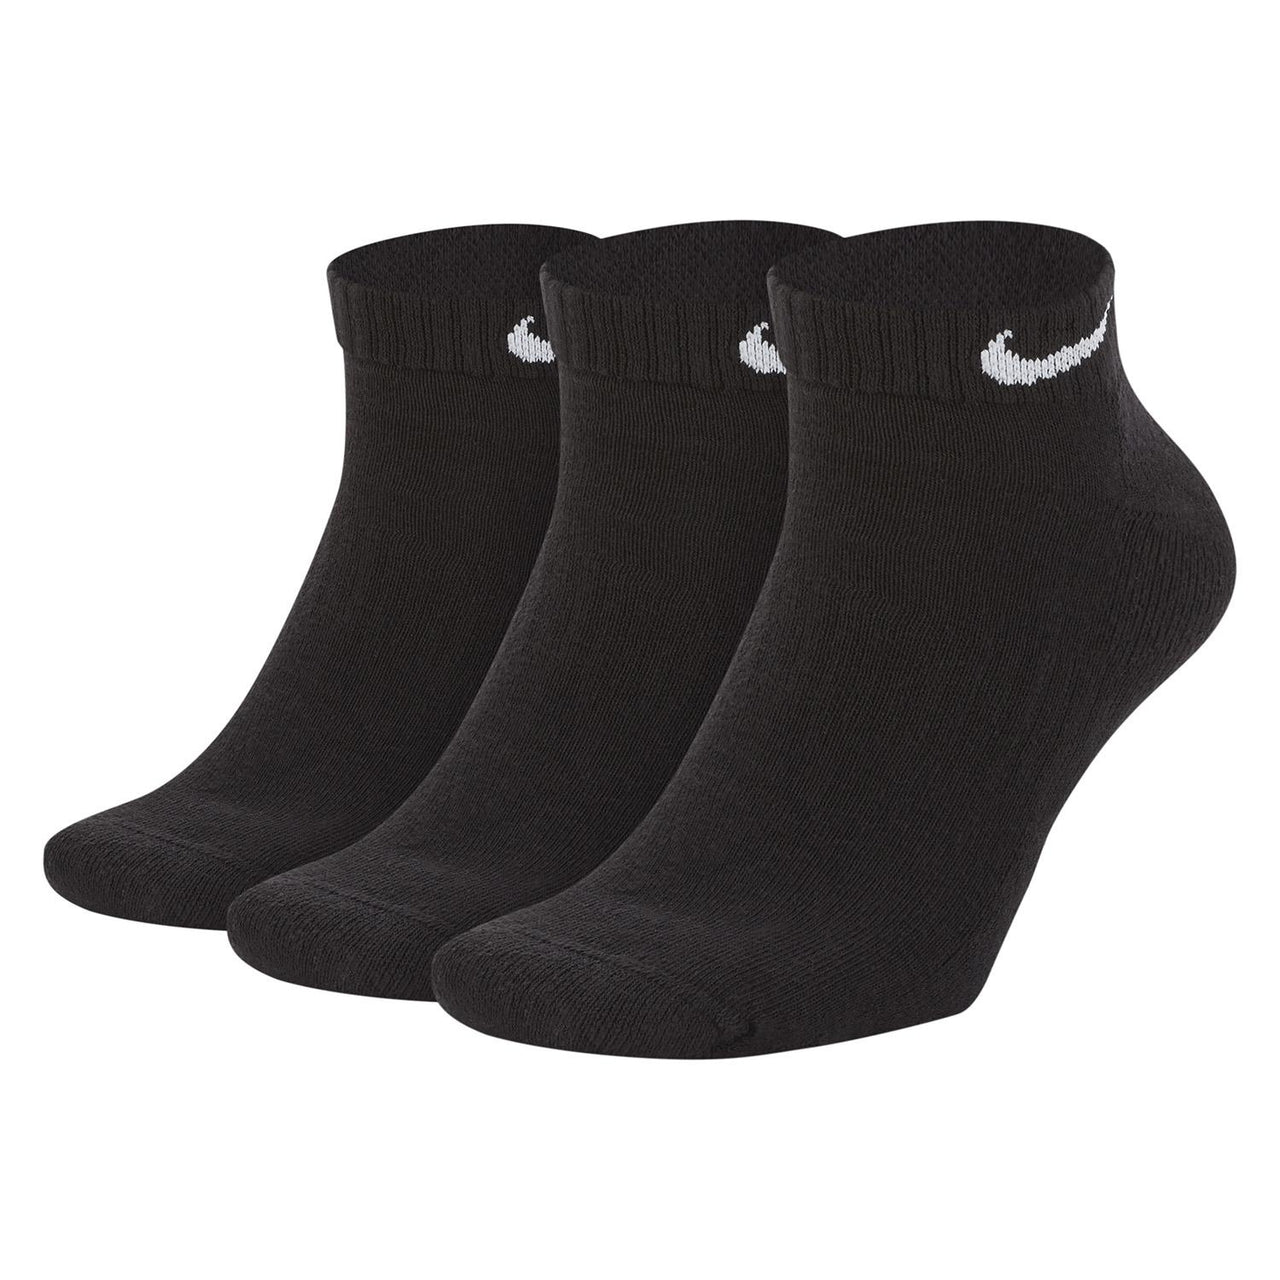 3pk Nike Everyday Cushion low socks